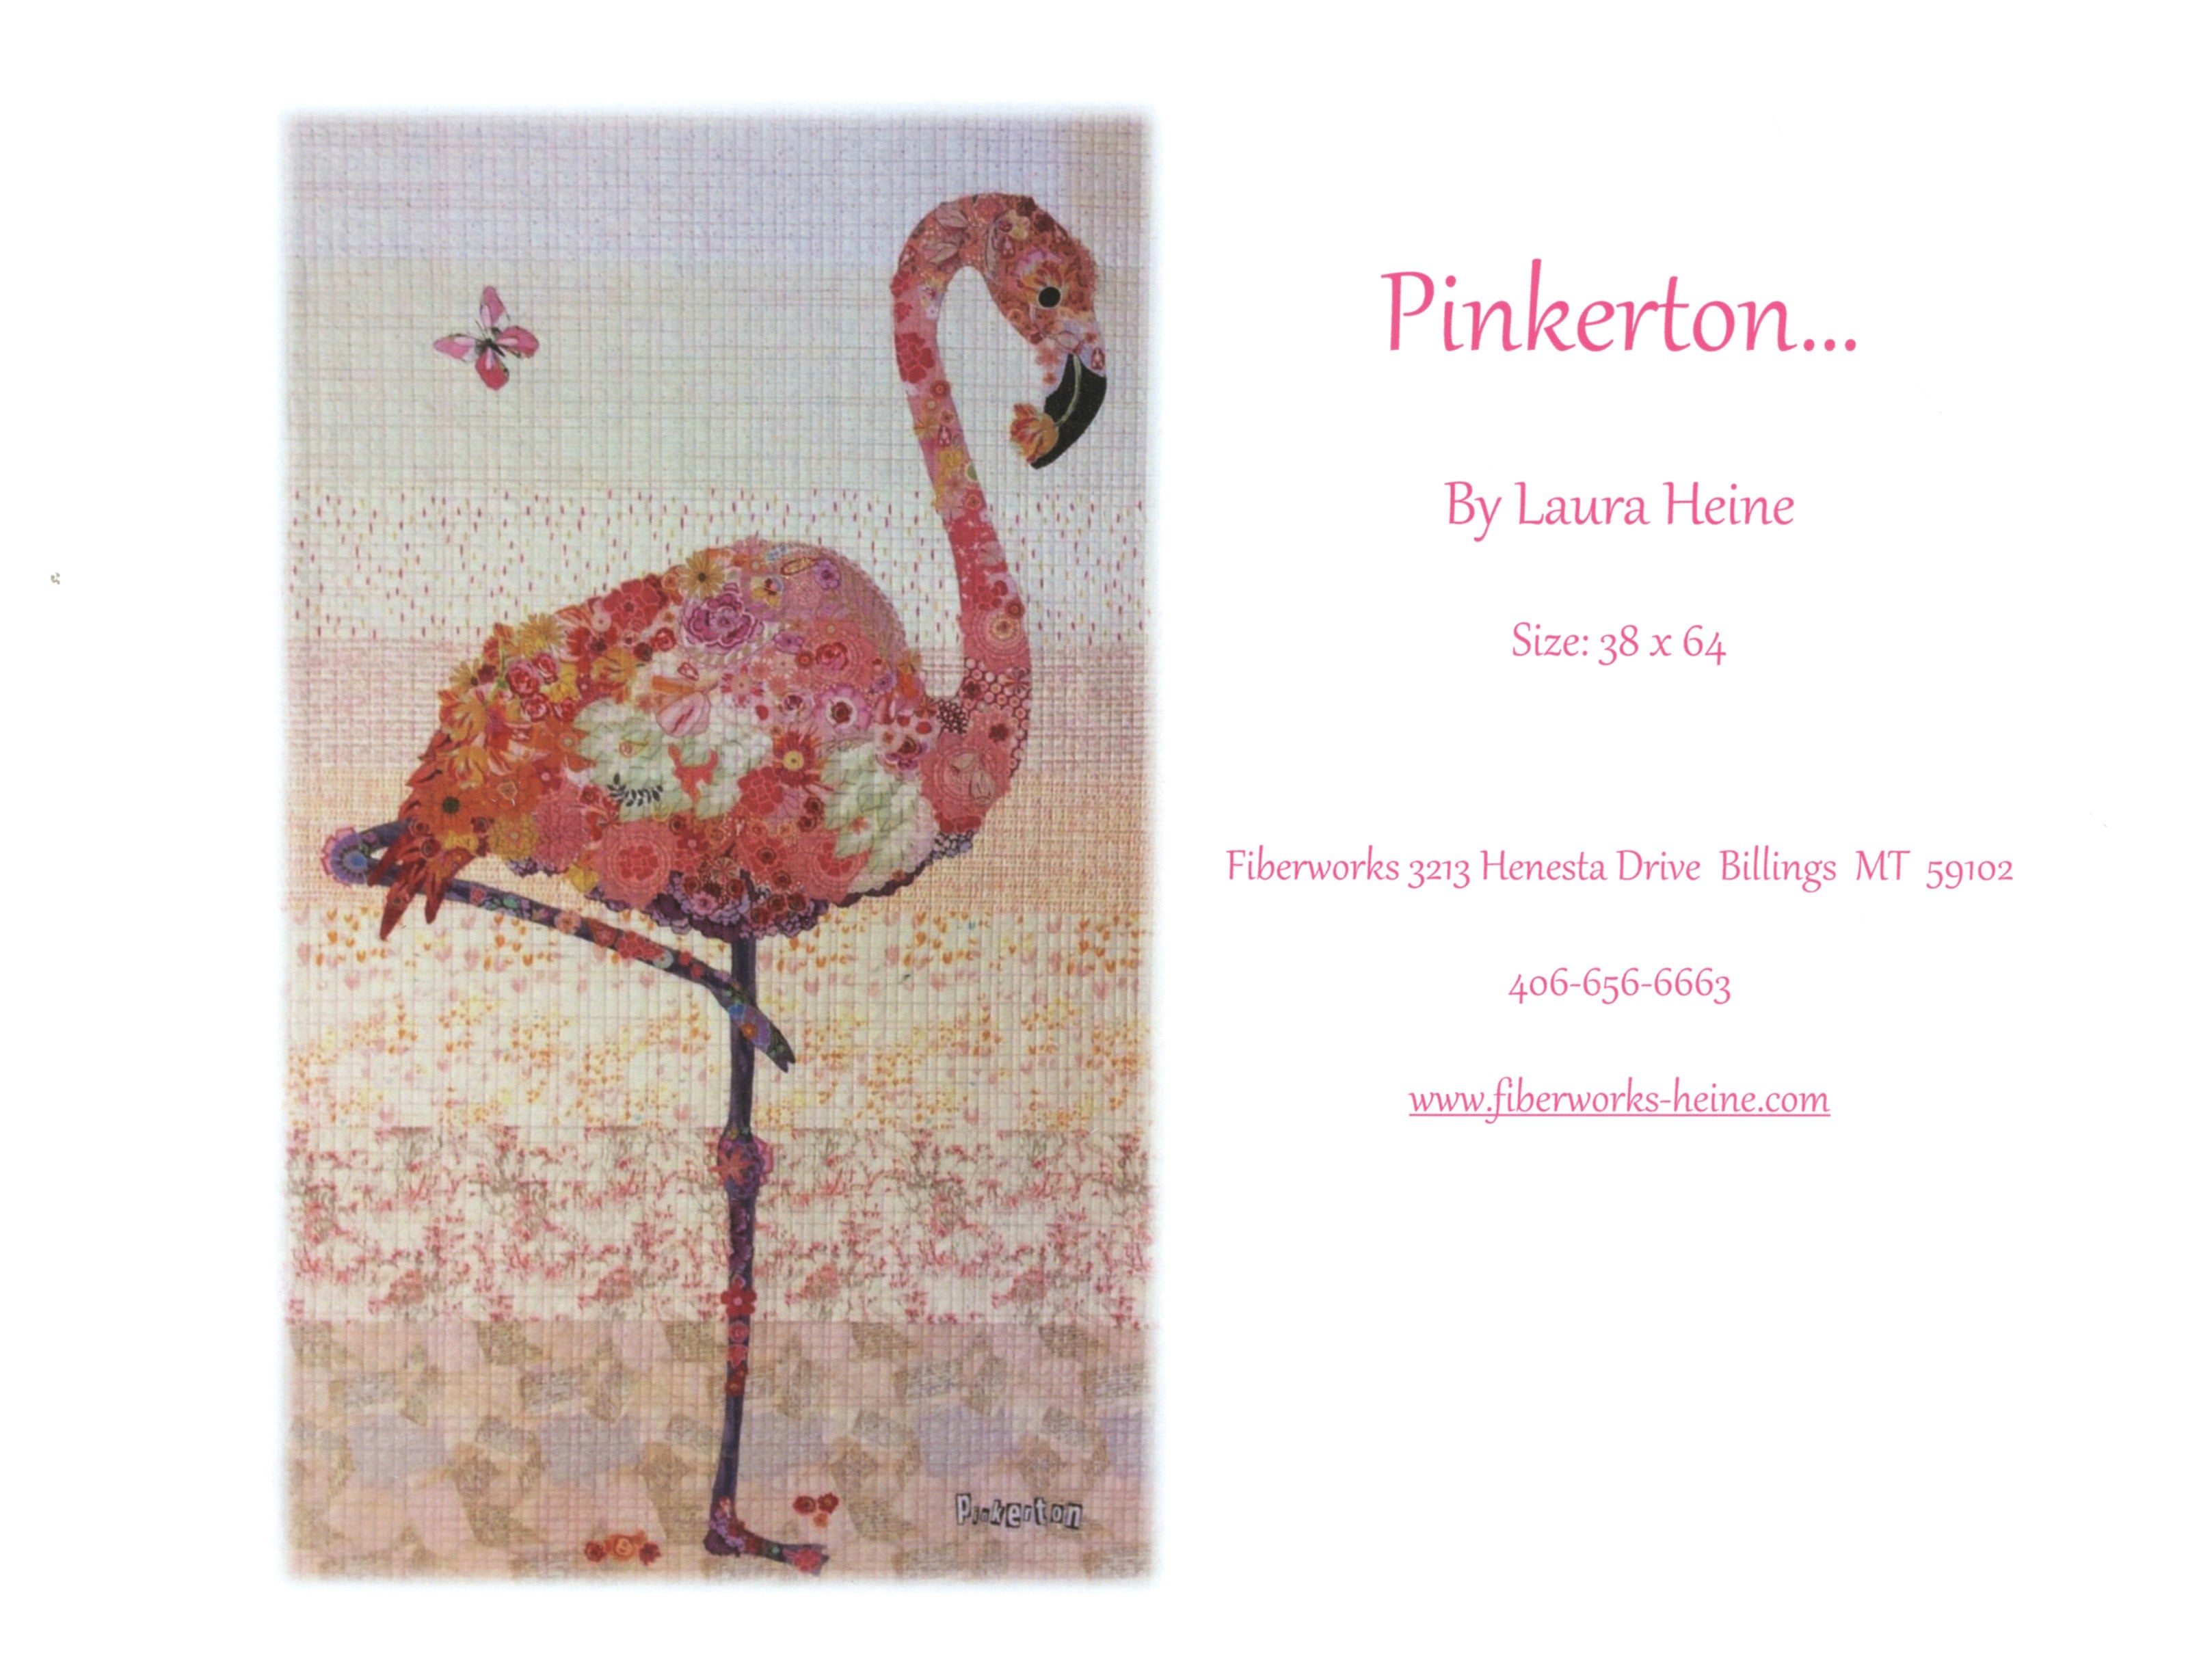 Pinkerton Flamingo Fused Fabric Collage Quilt Pattern by Laura Heine of Fiberworks